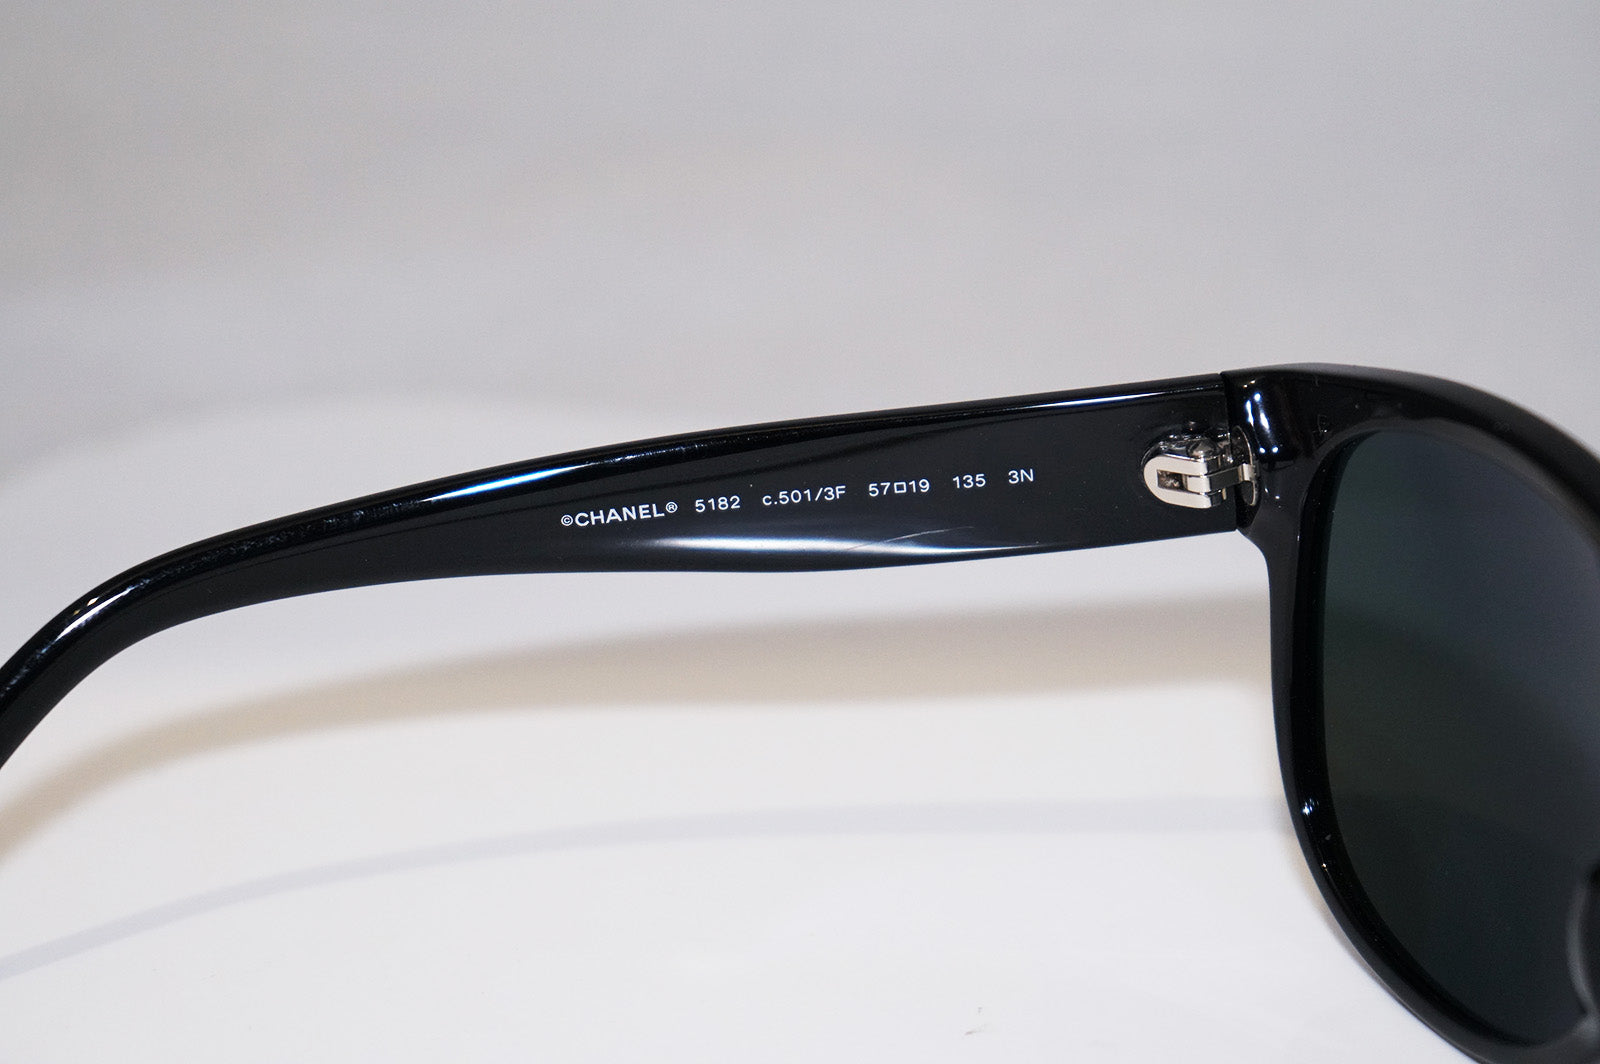 CHANEL Womens Designer Sunglasses Black Butterfly 5182 C501 3F